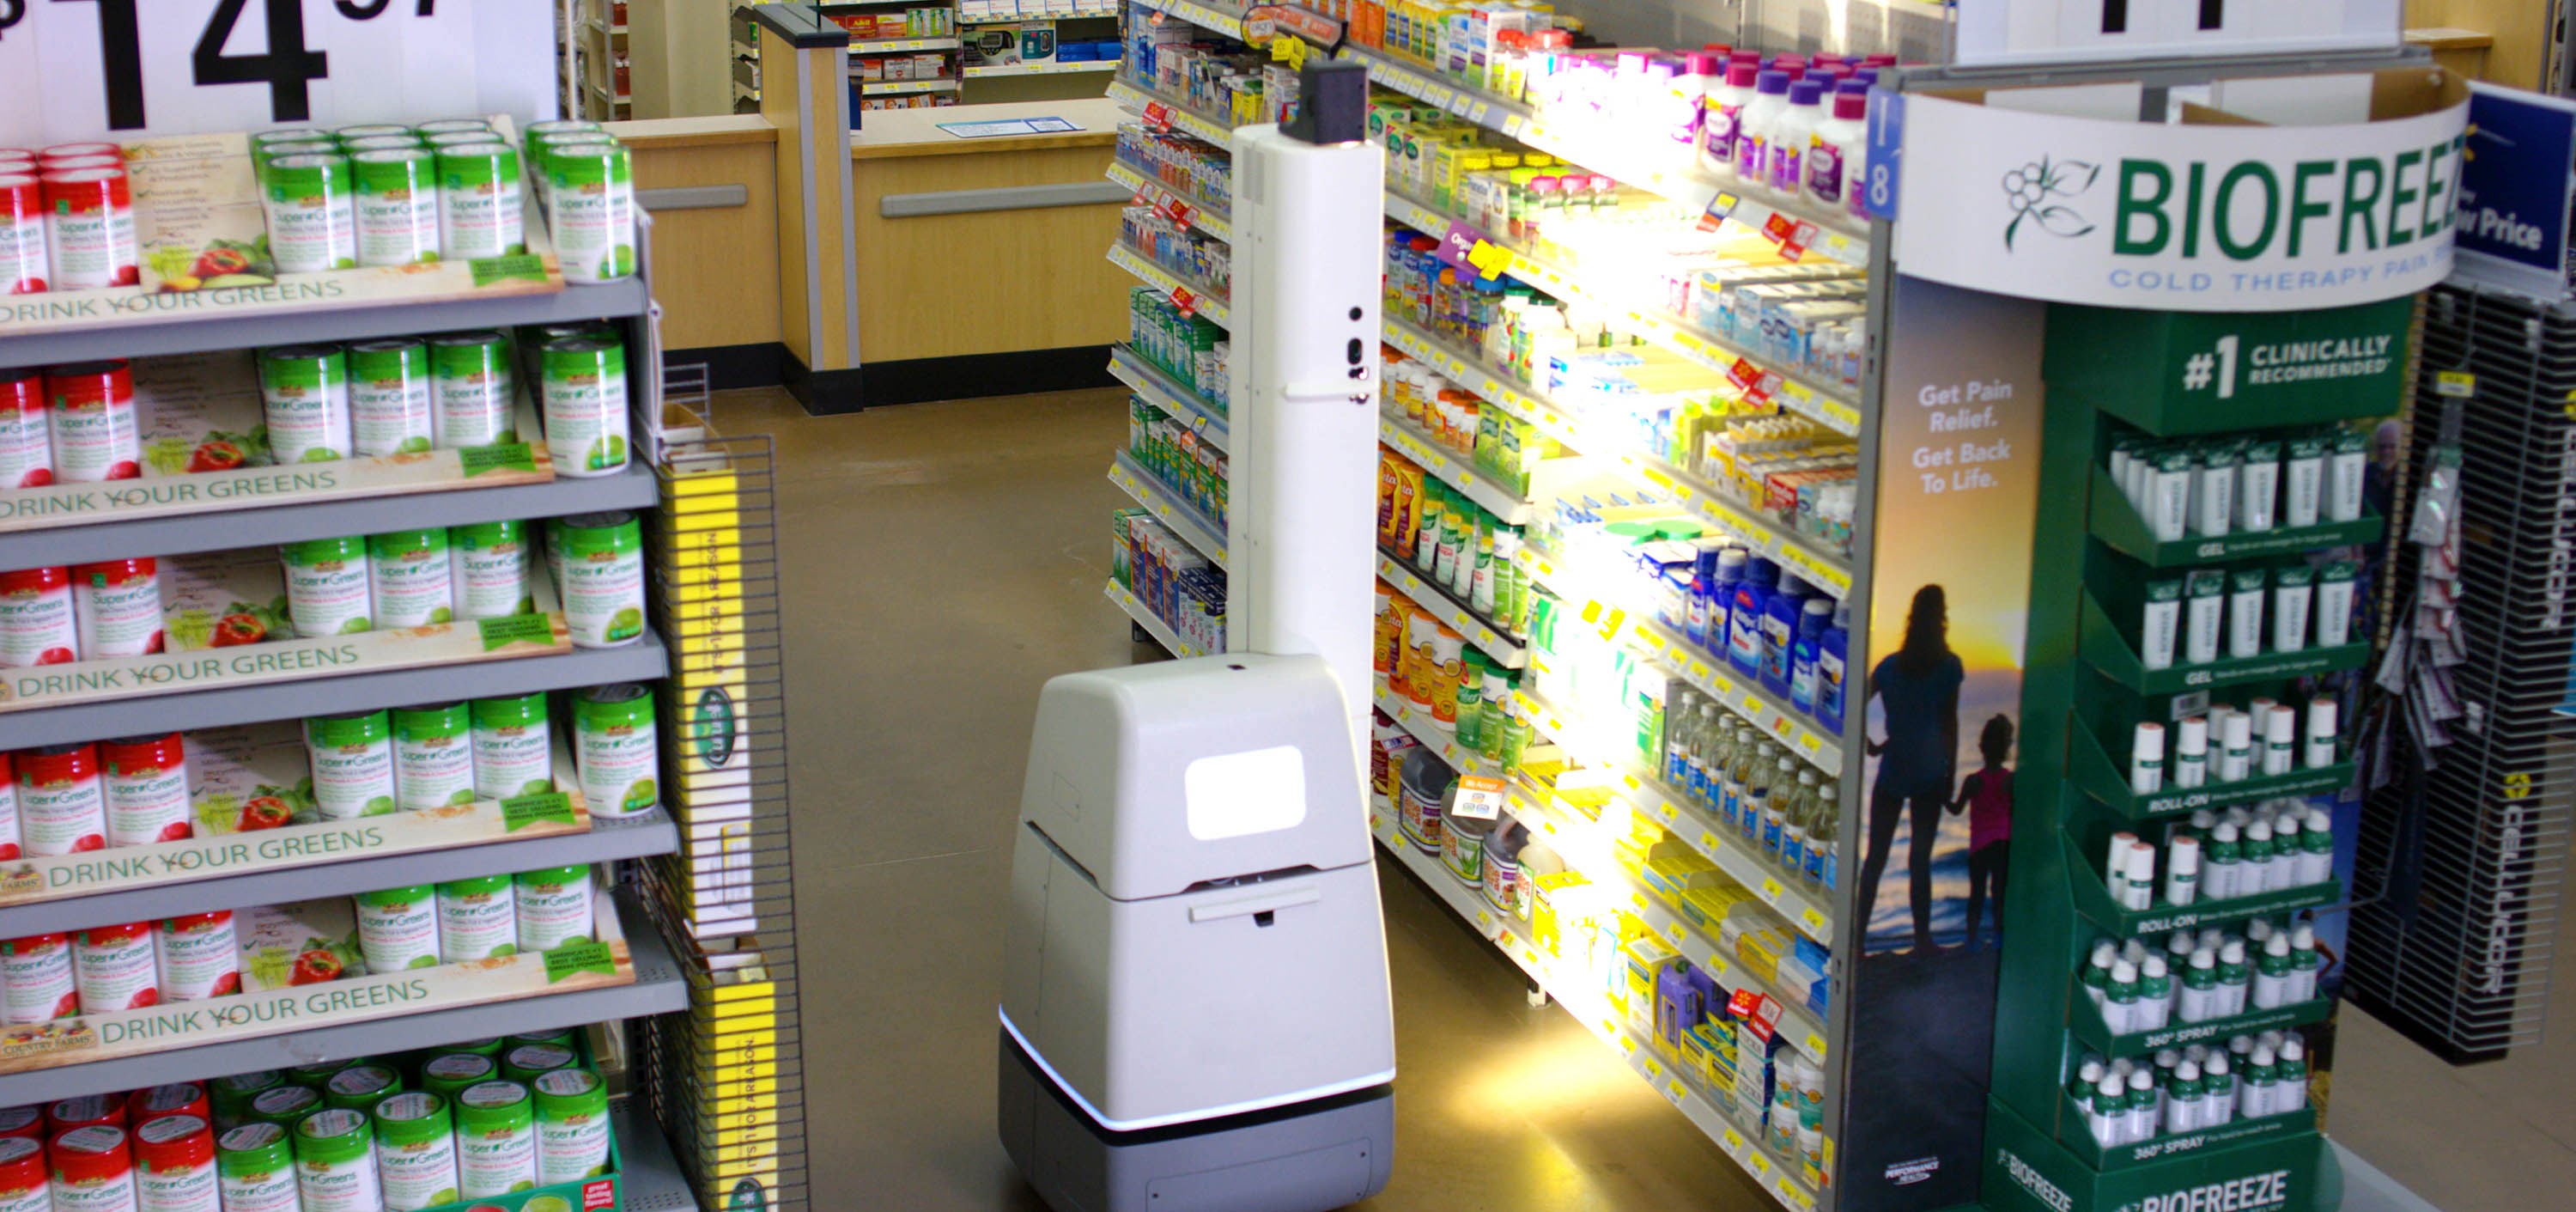 Auto-S scanning robot. Photo: Walmart press photo